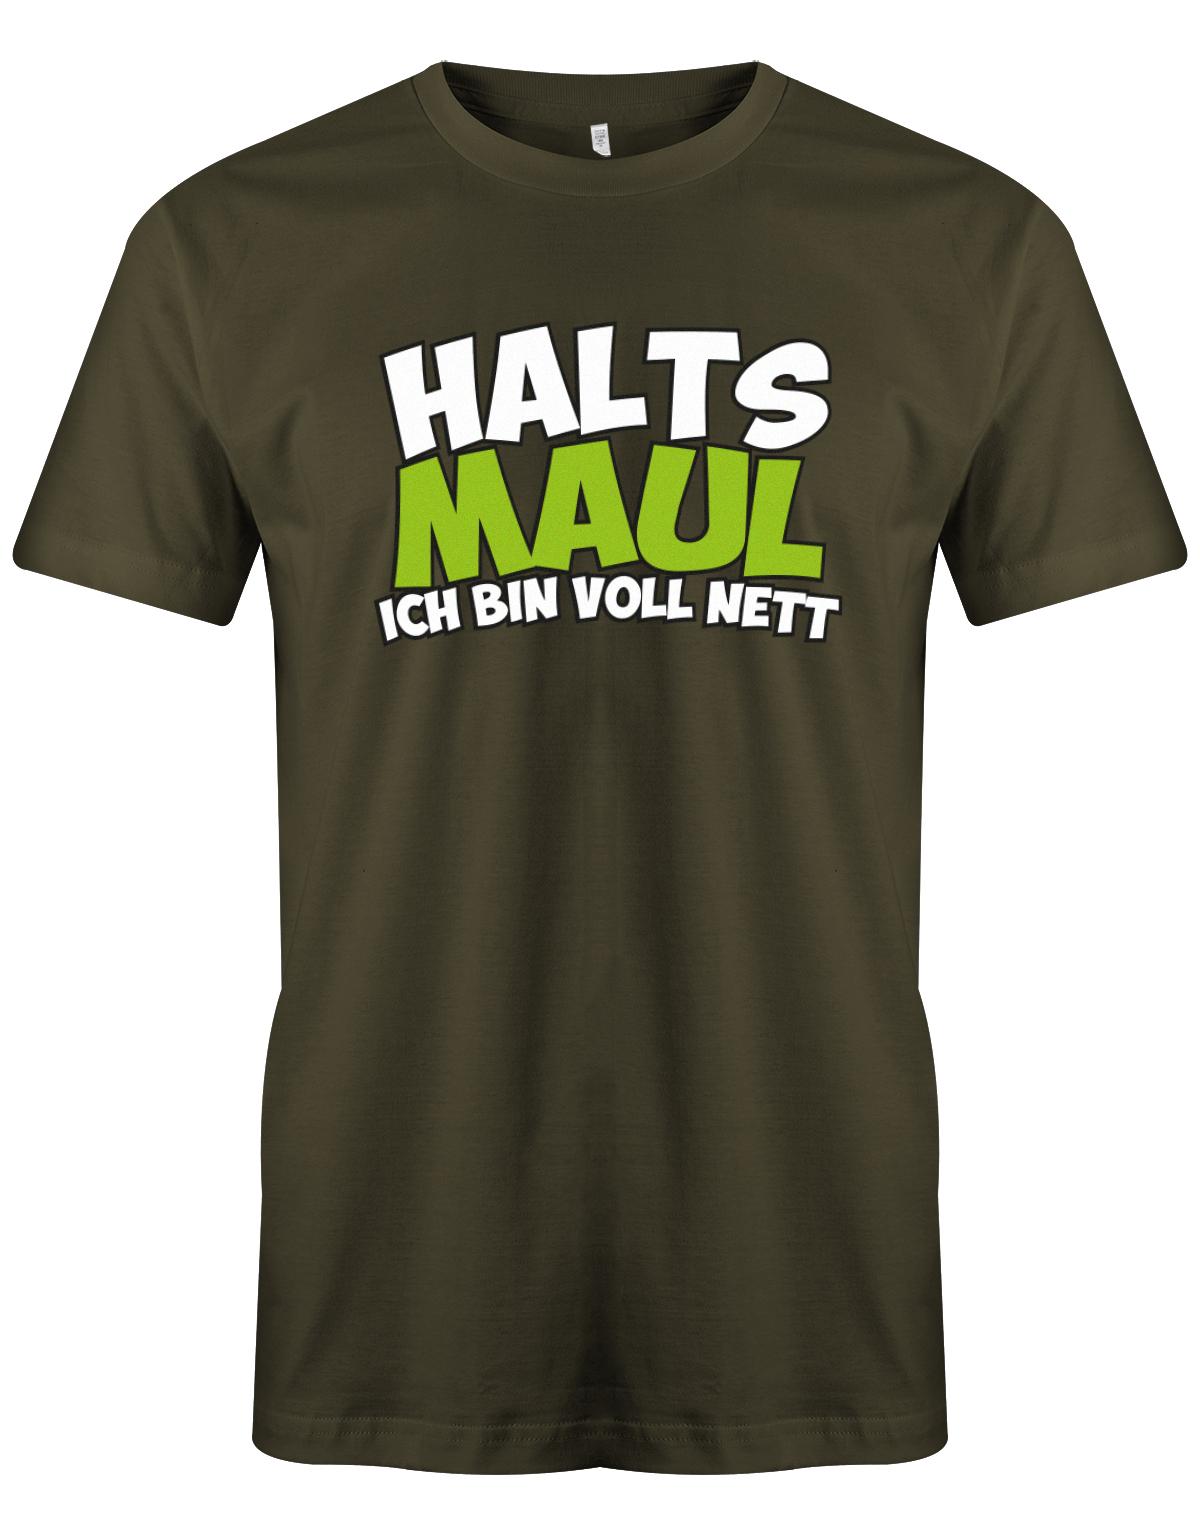 Halts-Maul-ich-bin-voll-nett-Herren-Shirt-Army